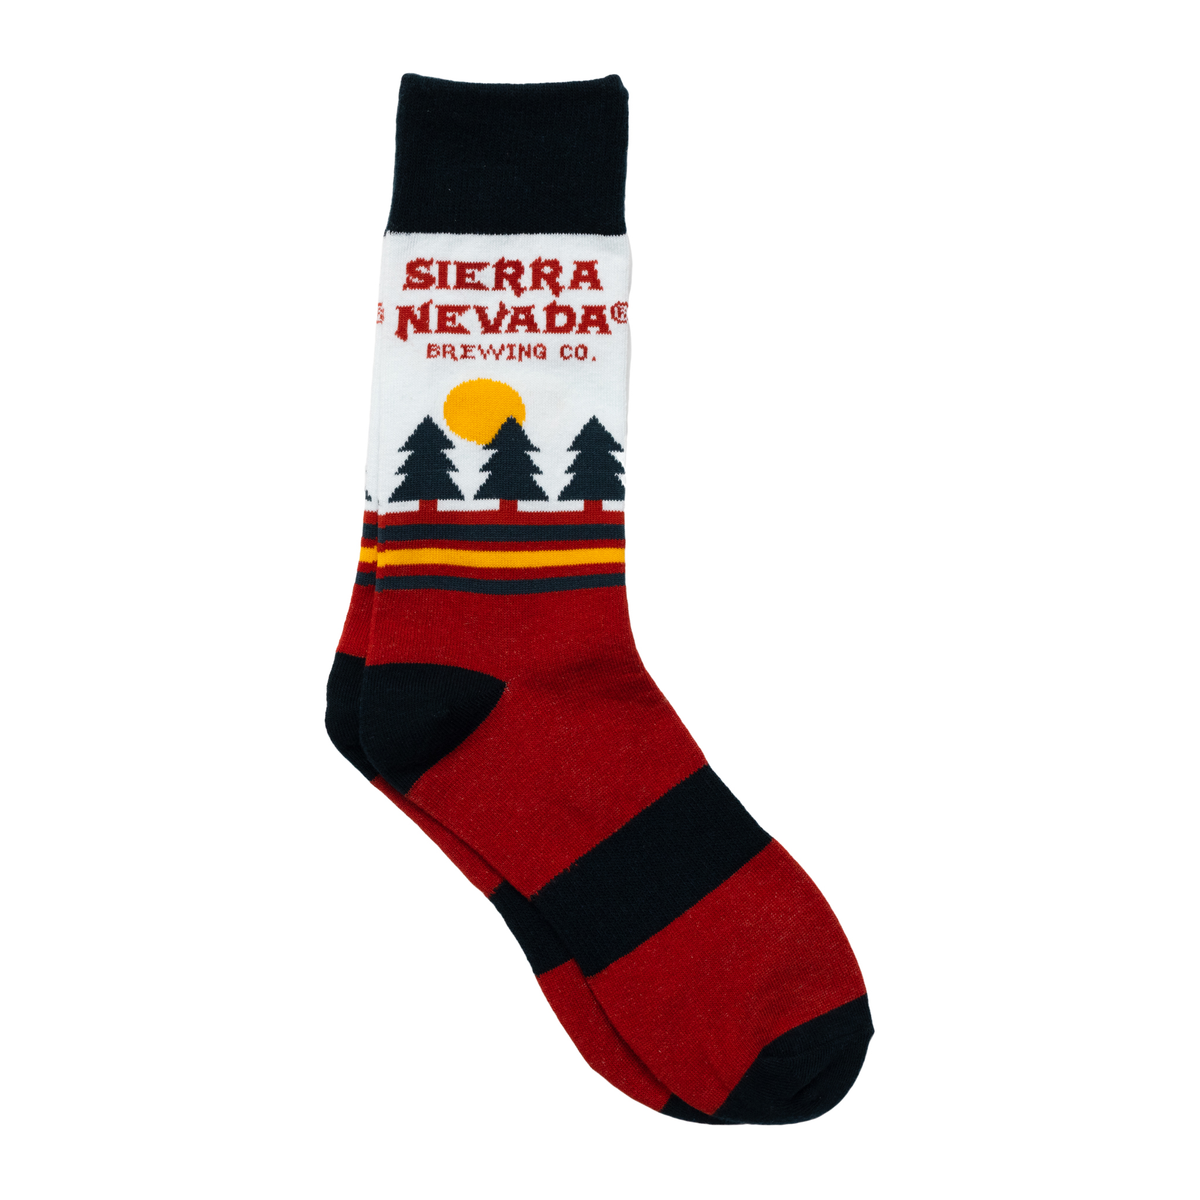 Sierra Nevada Brewing Co. Locale Trees socks